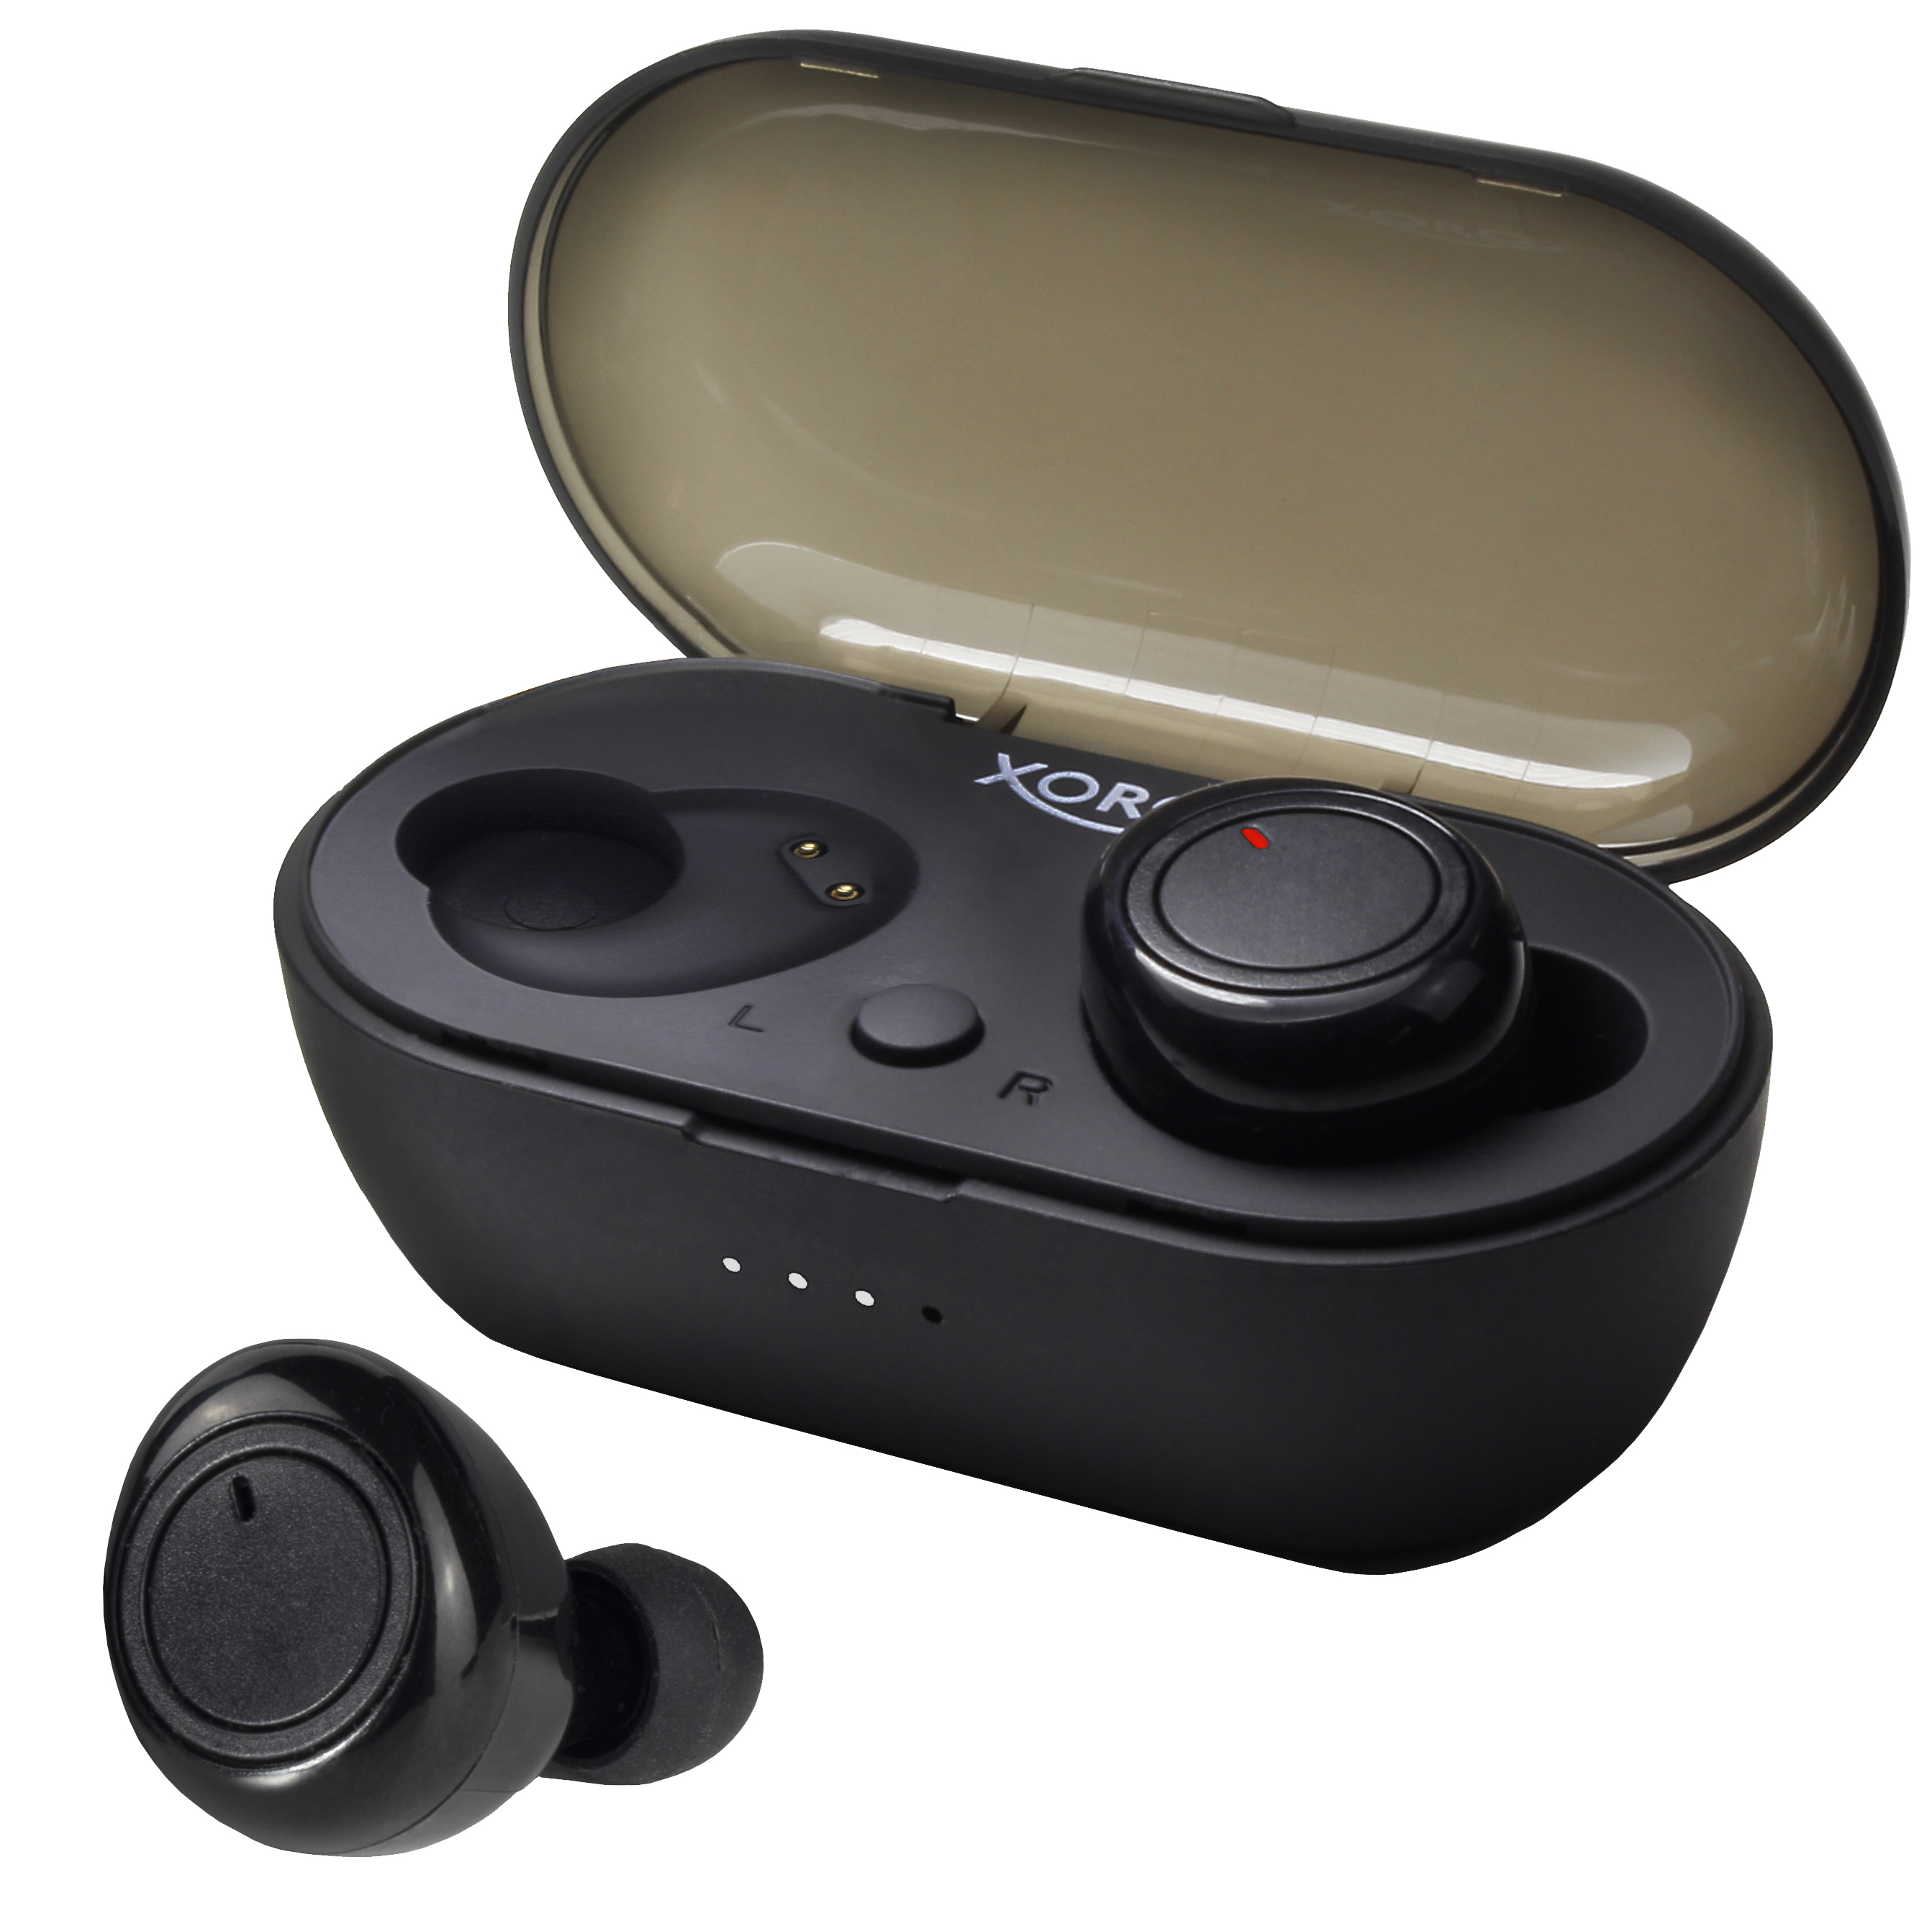 XORO XORO KHB 25 Bluetooth In-ear HSP, Black Bluetooth integriertem mit HFP separater In-Ear-Kopfhörer Akku Ladebox & In-Ear-Kopfhörer Kabelloser